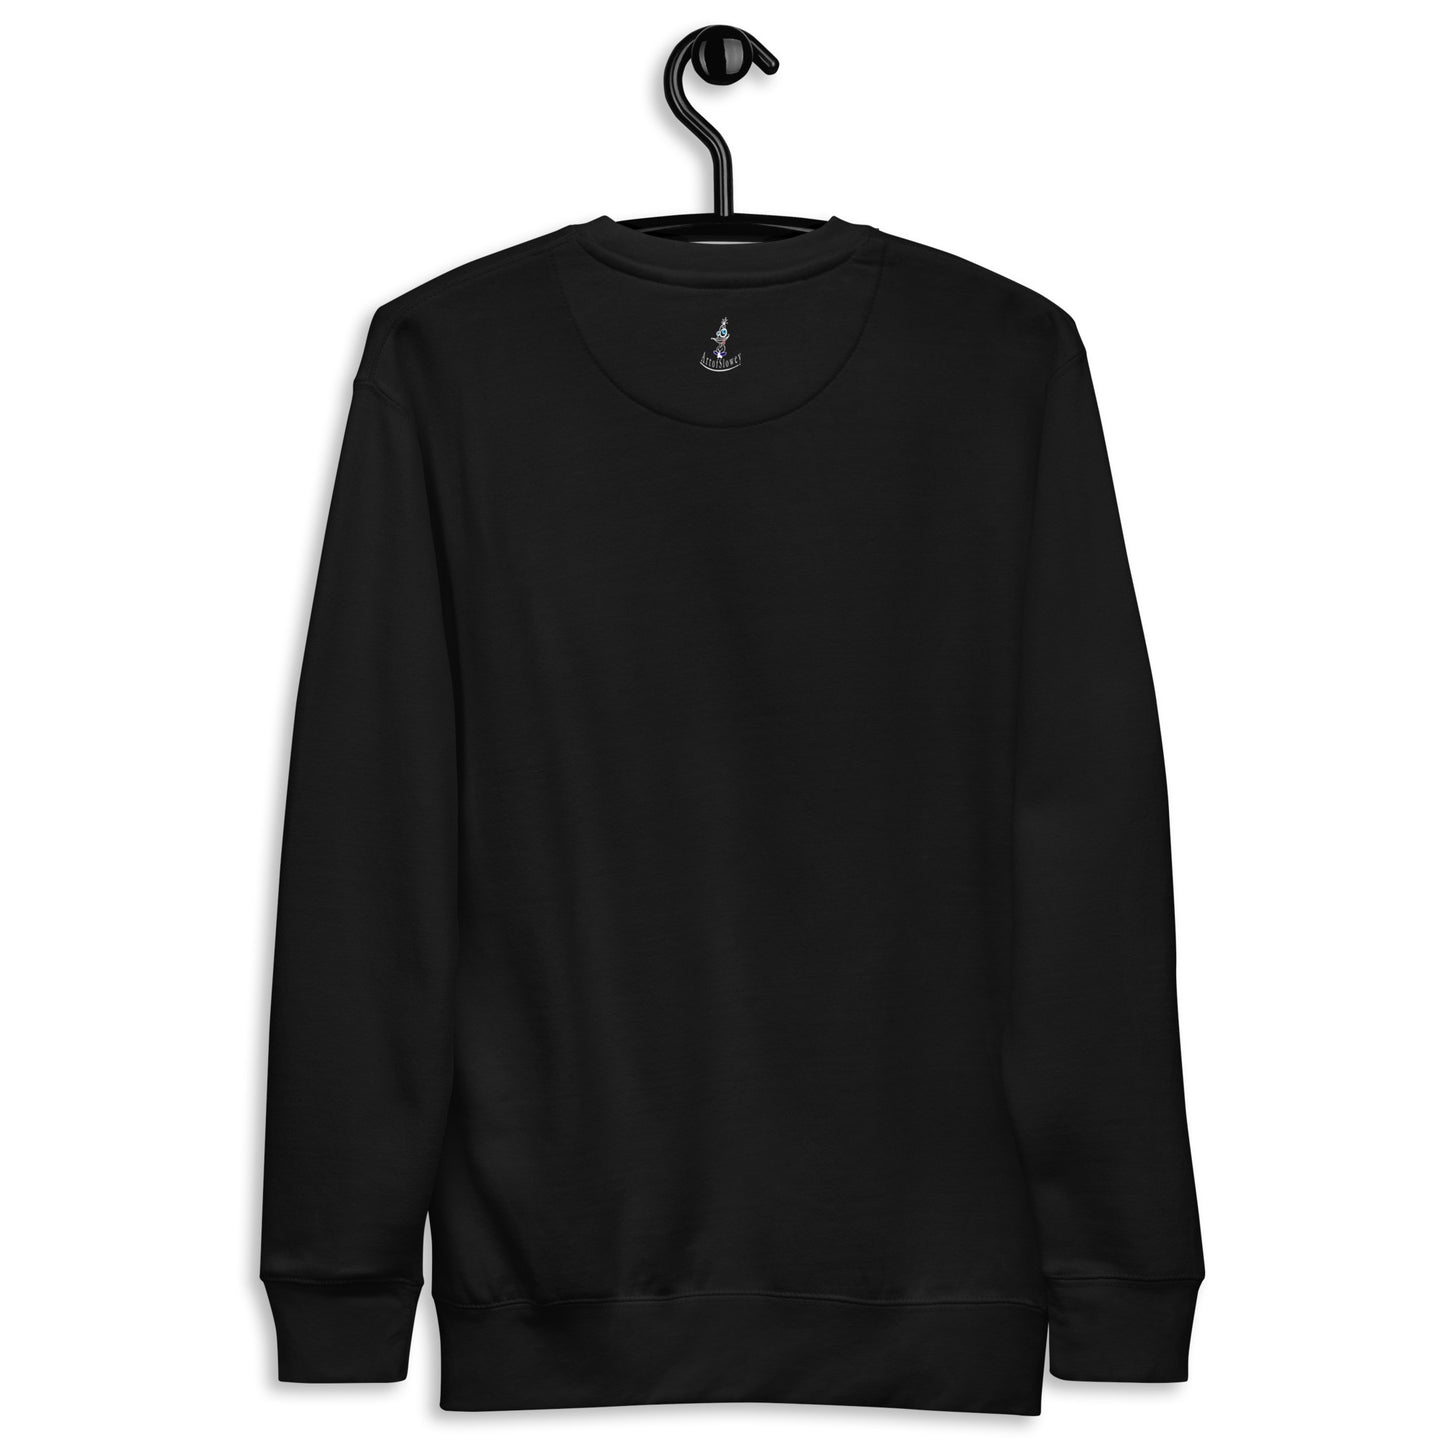 ArtOfSlowey, Unisex Premium Sweatshirt